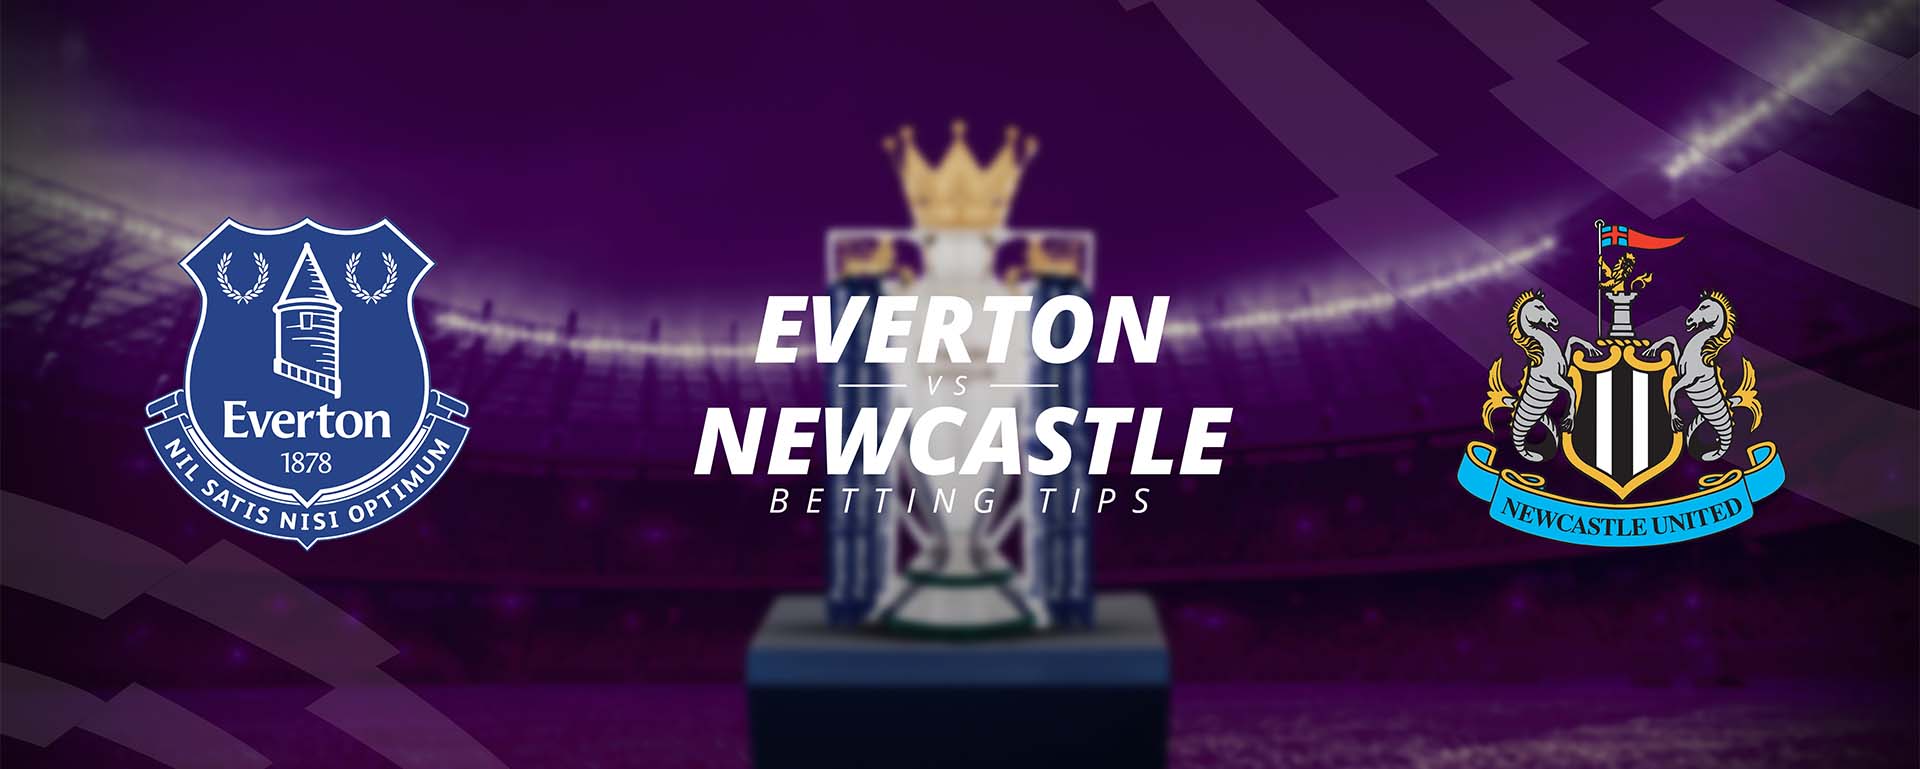 Newcastle everton vs Everton score